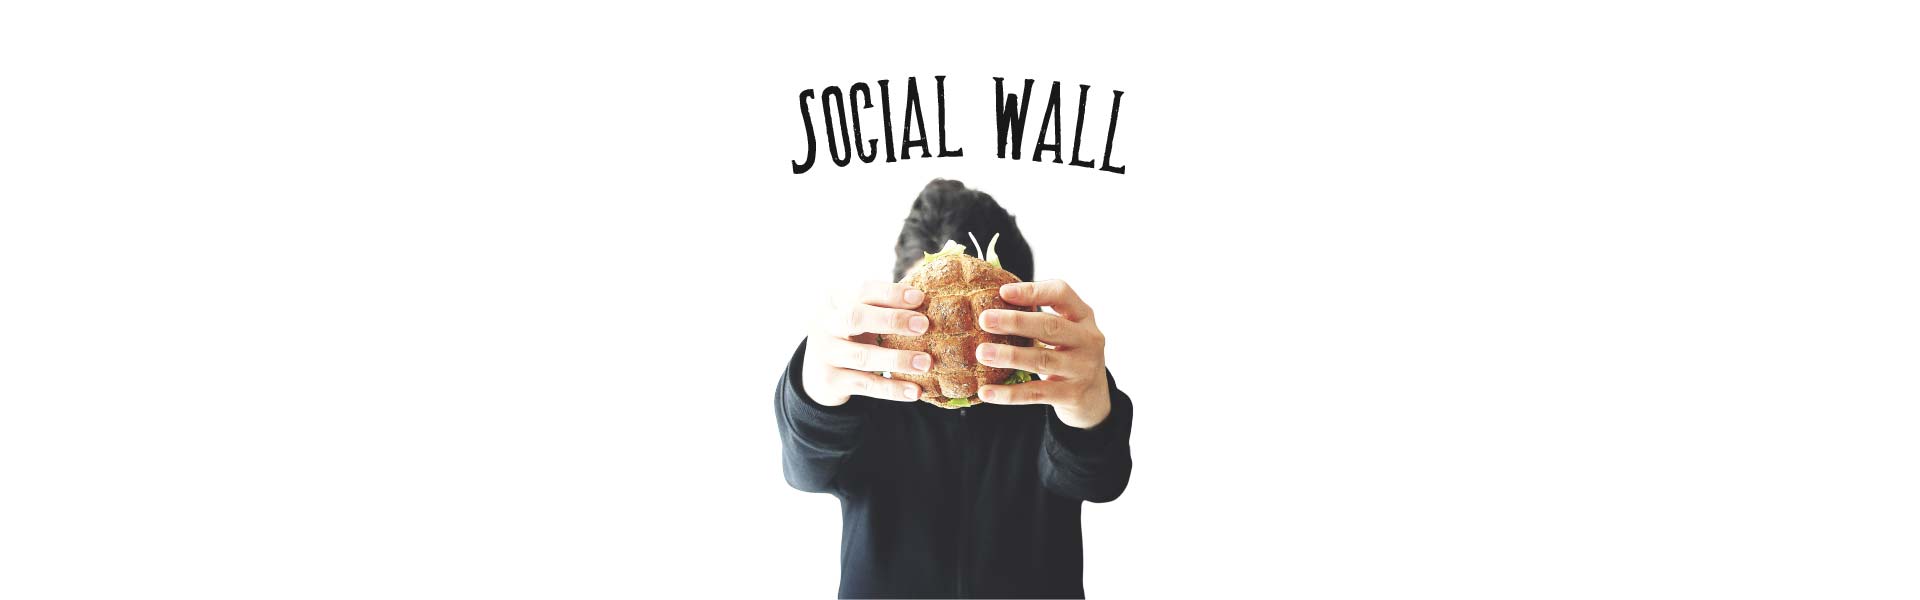 Social wall